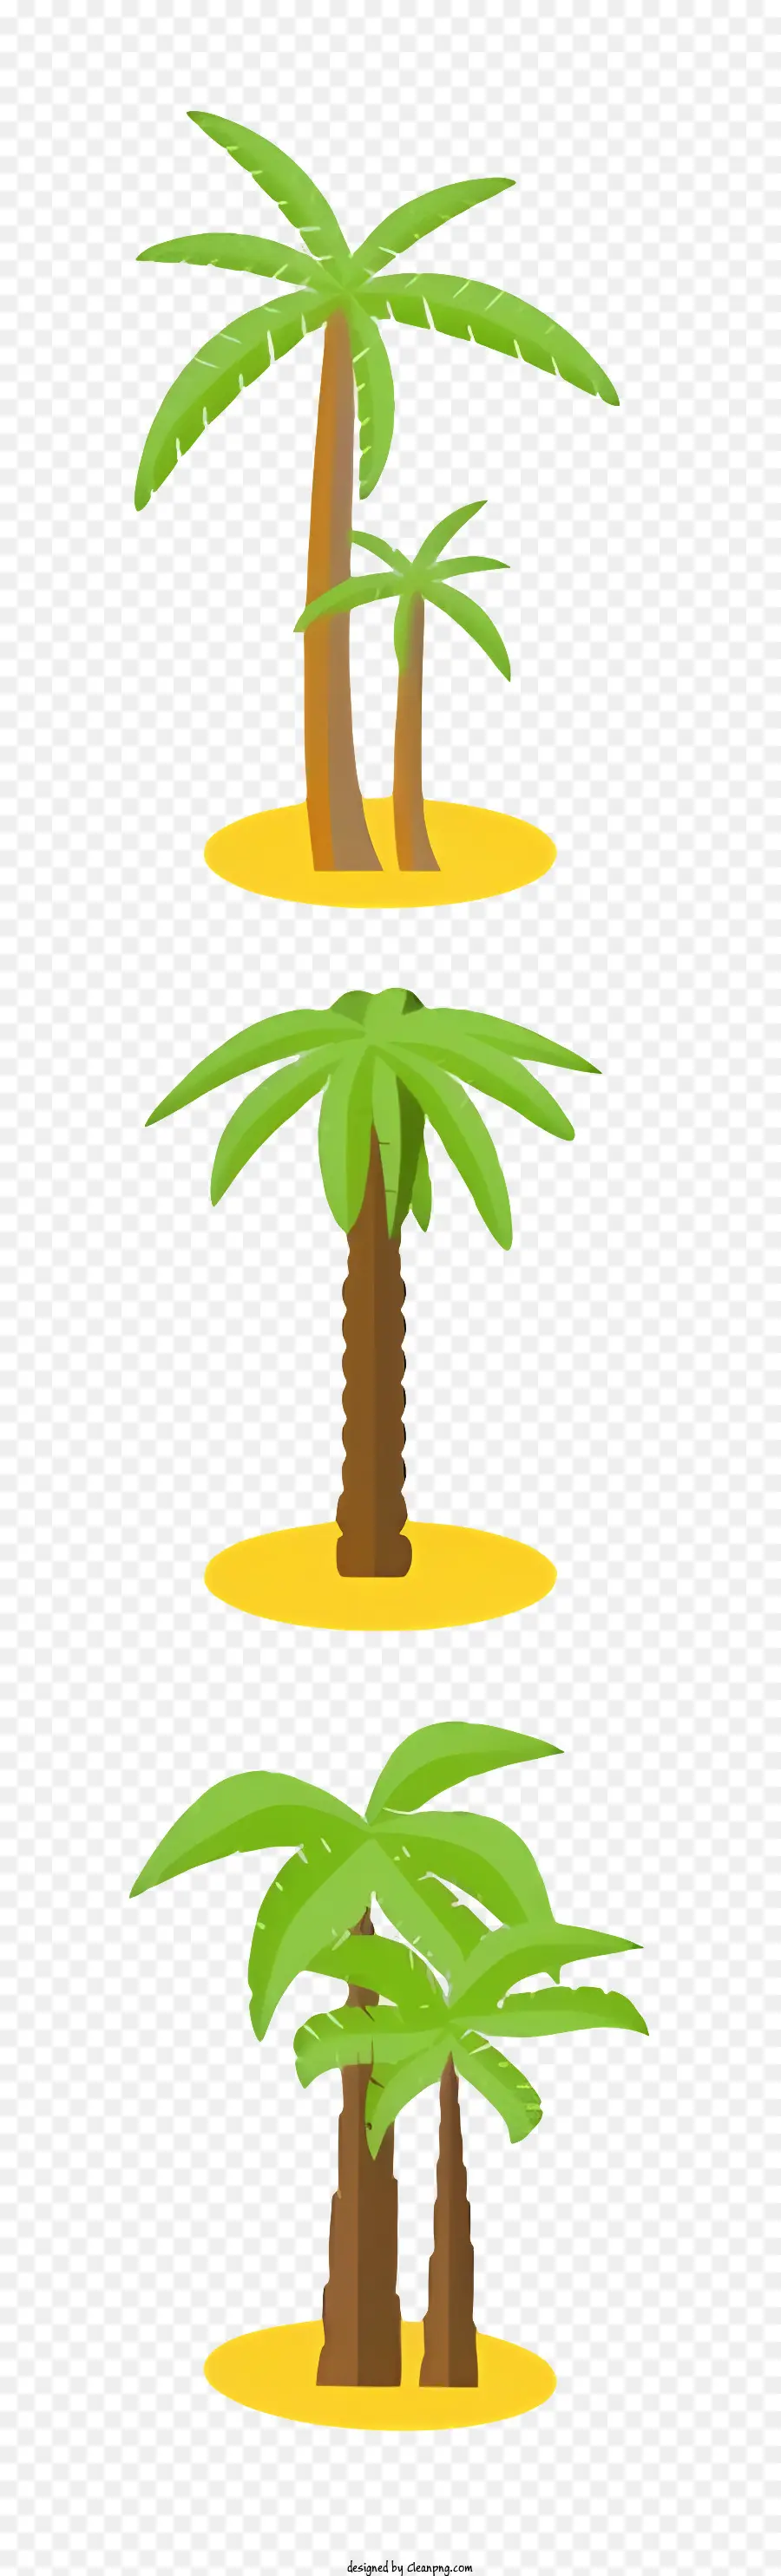 Palm trees